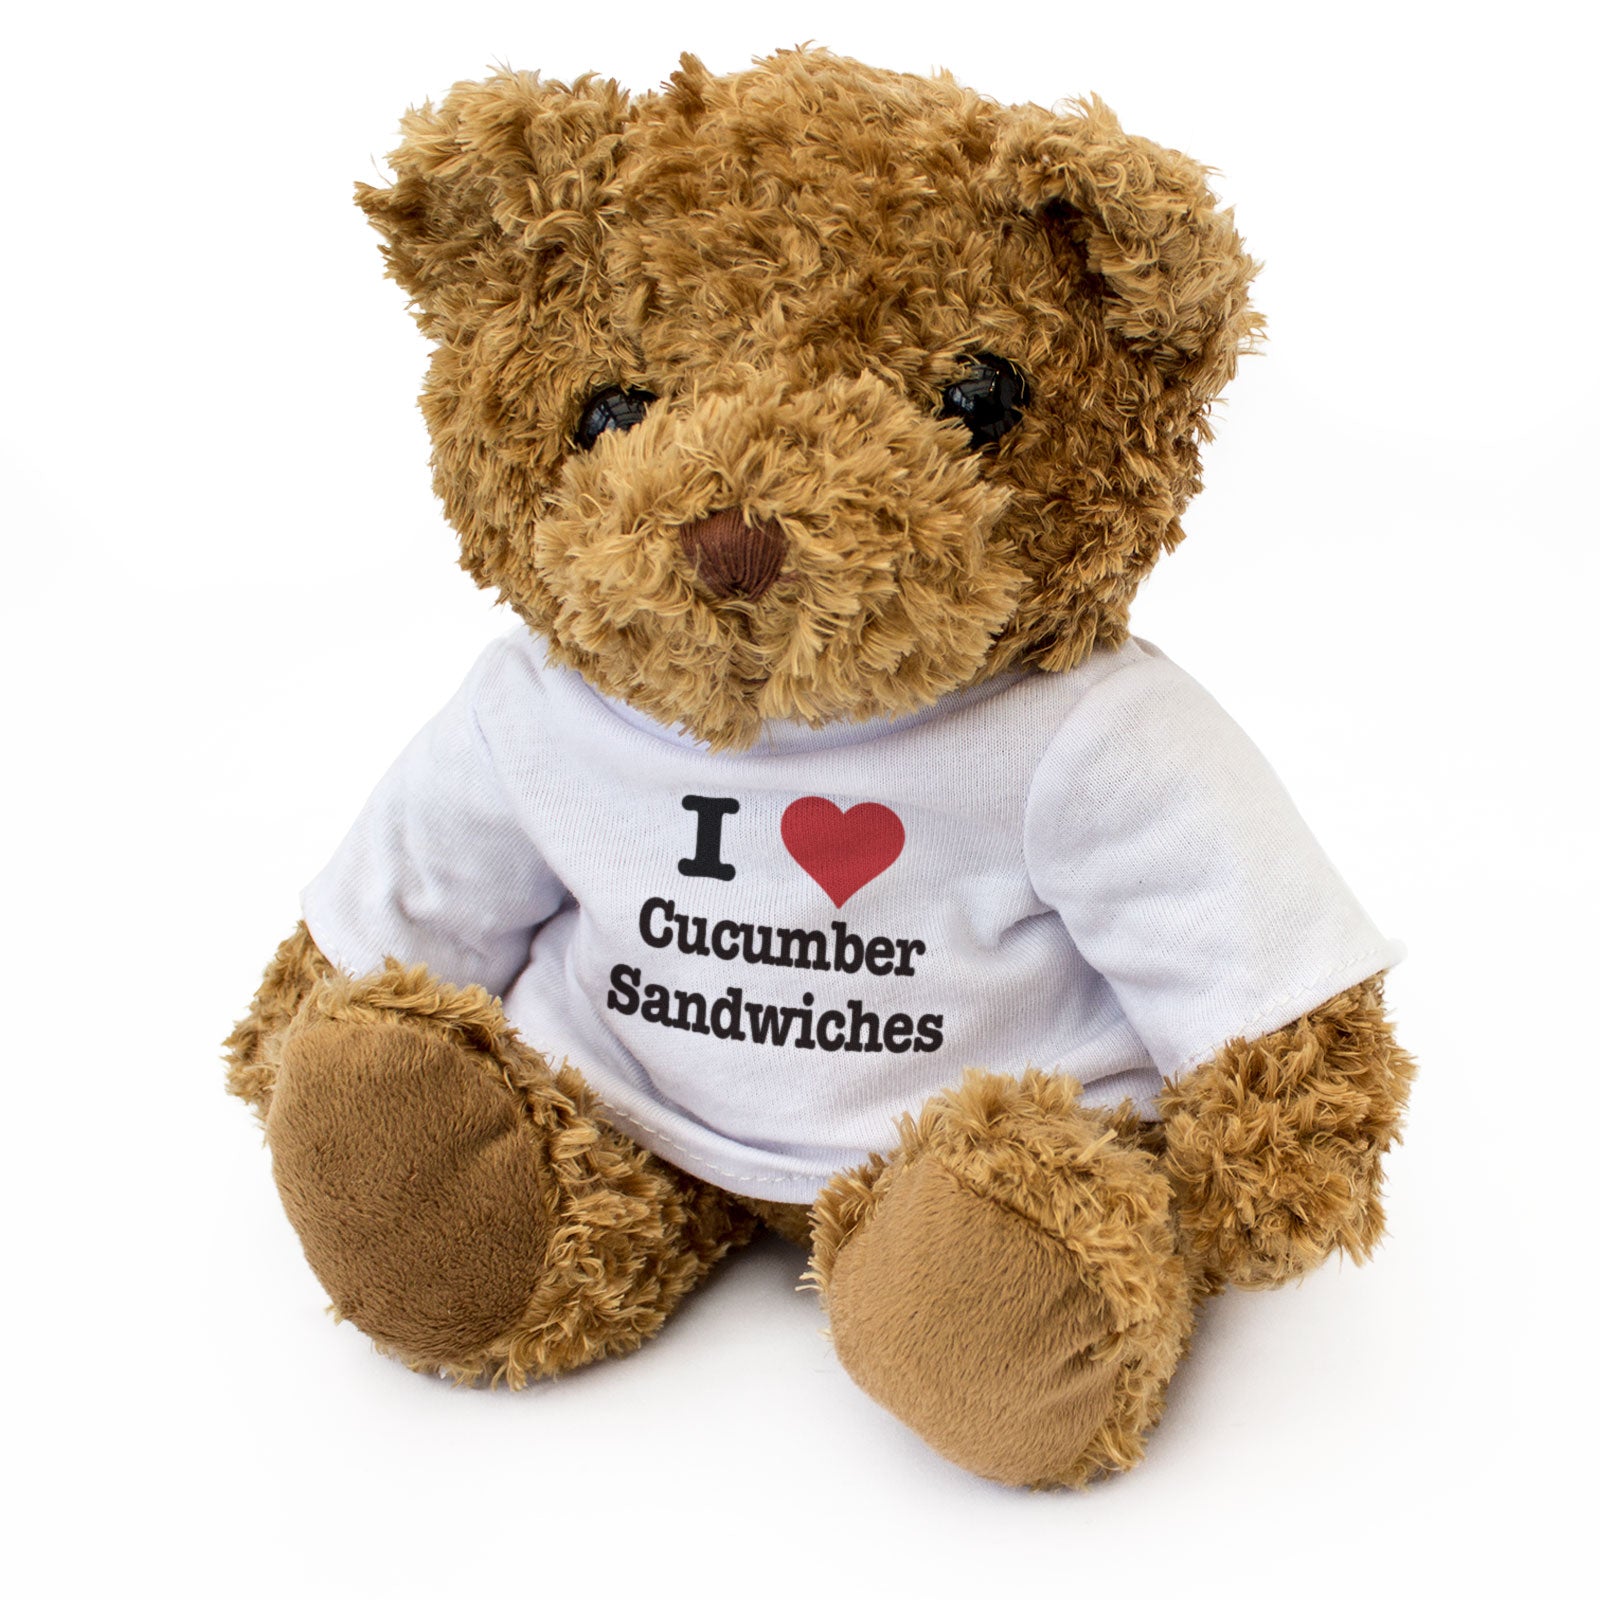 I Love Cucumber Sandwiches - Teddy Bear